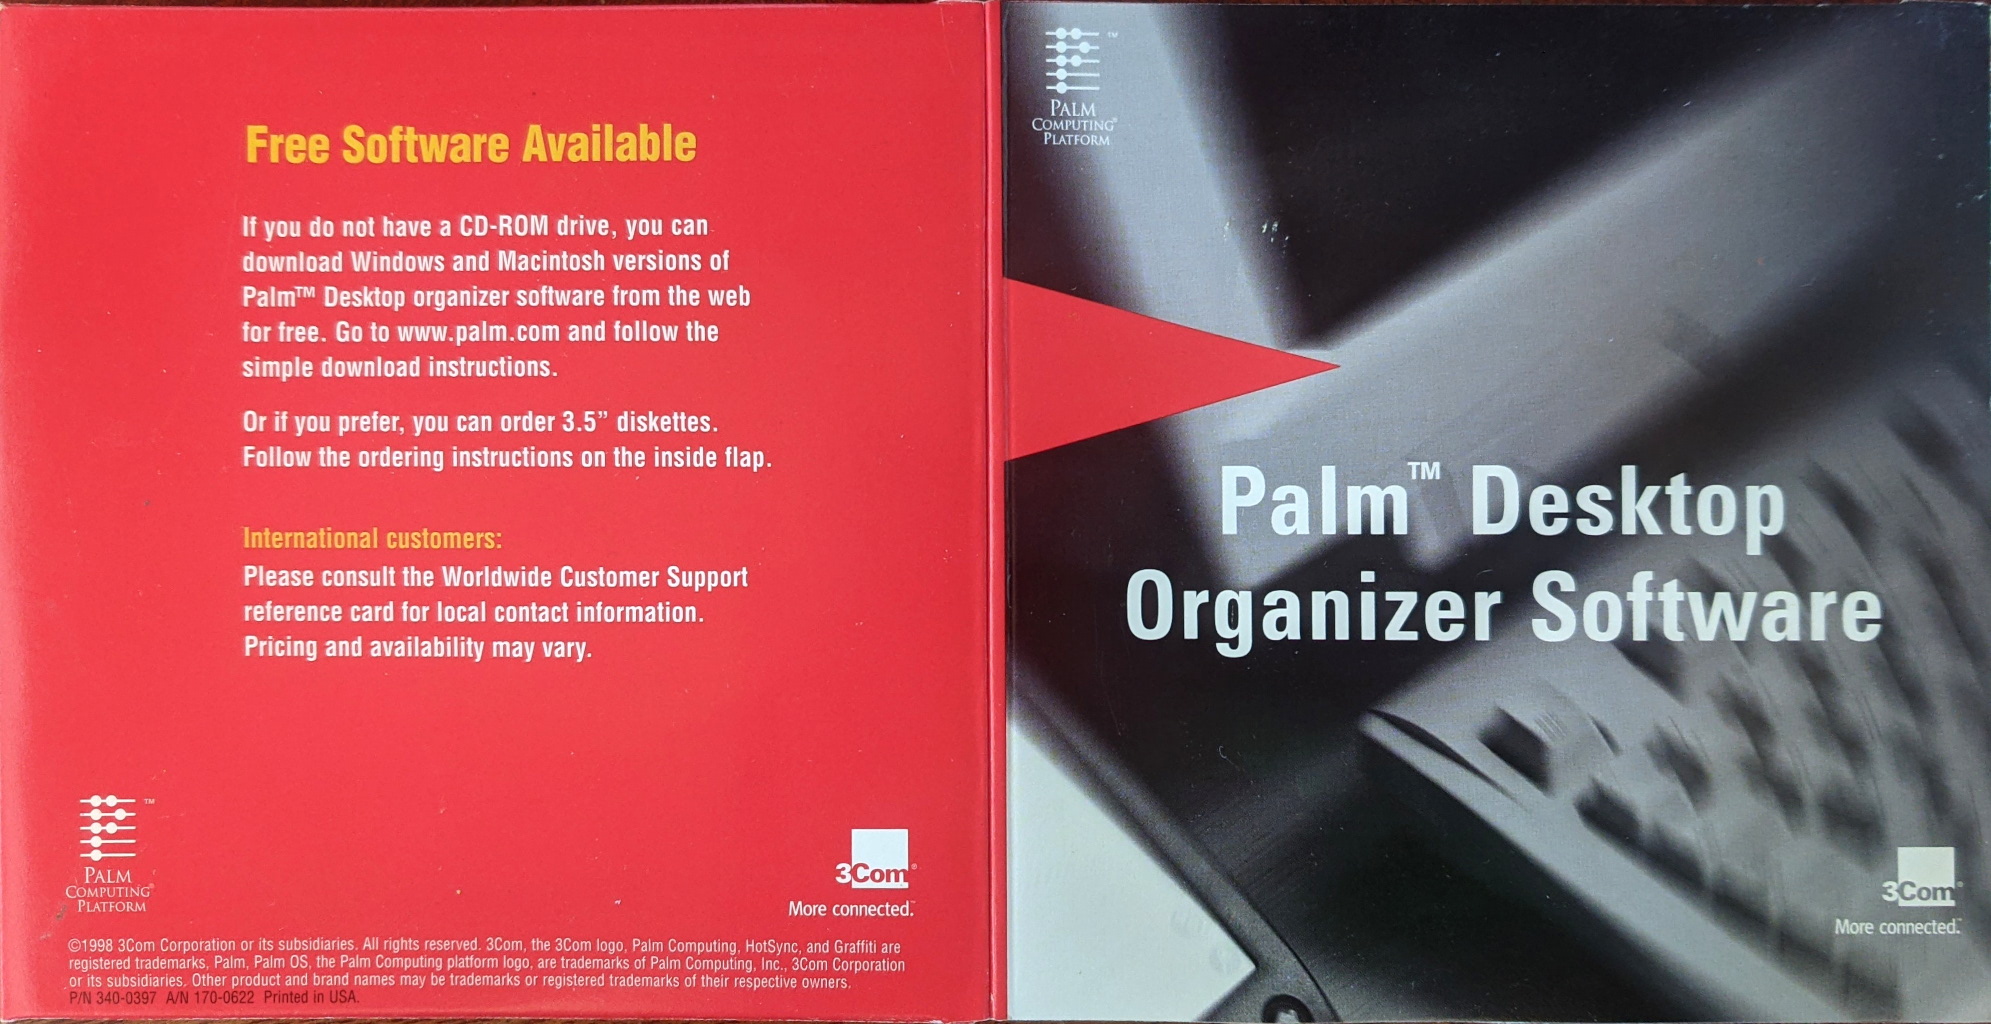 3com palm iii software download